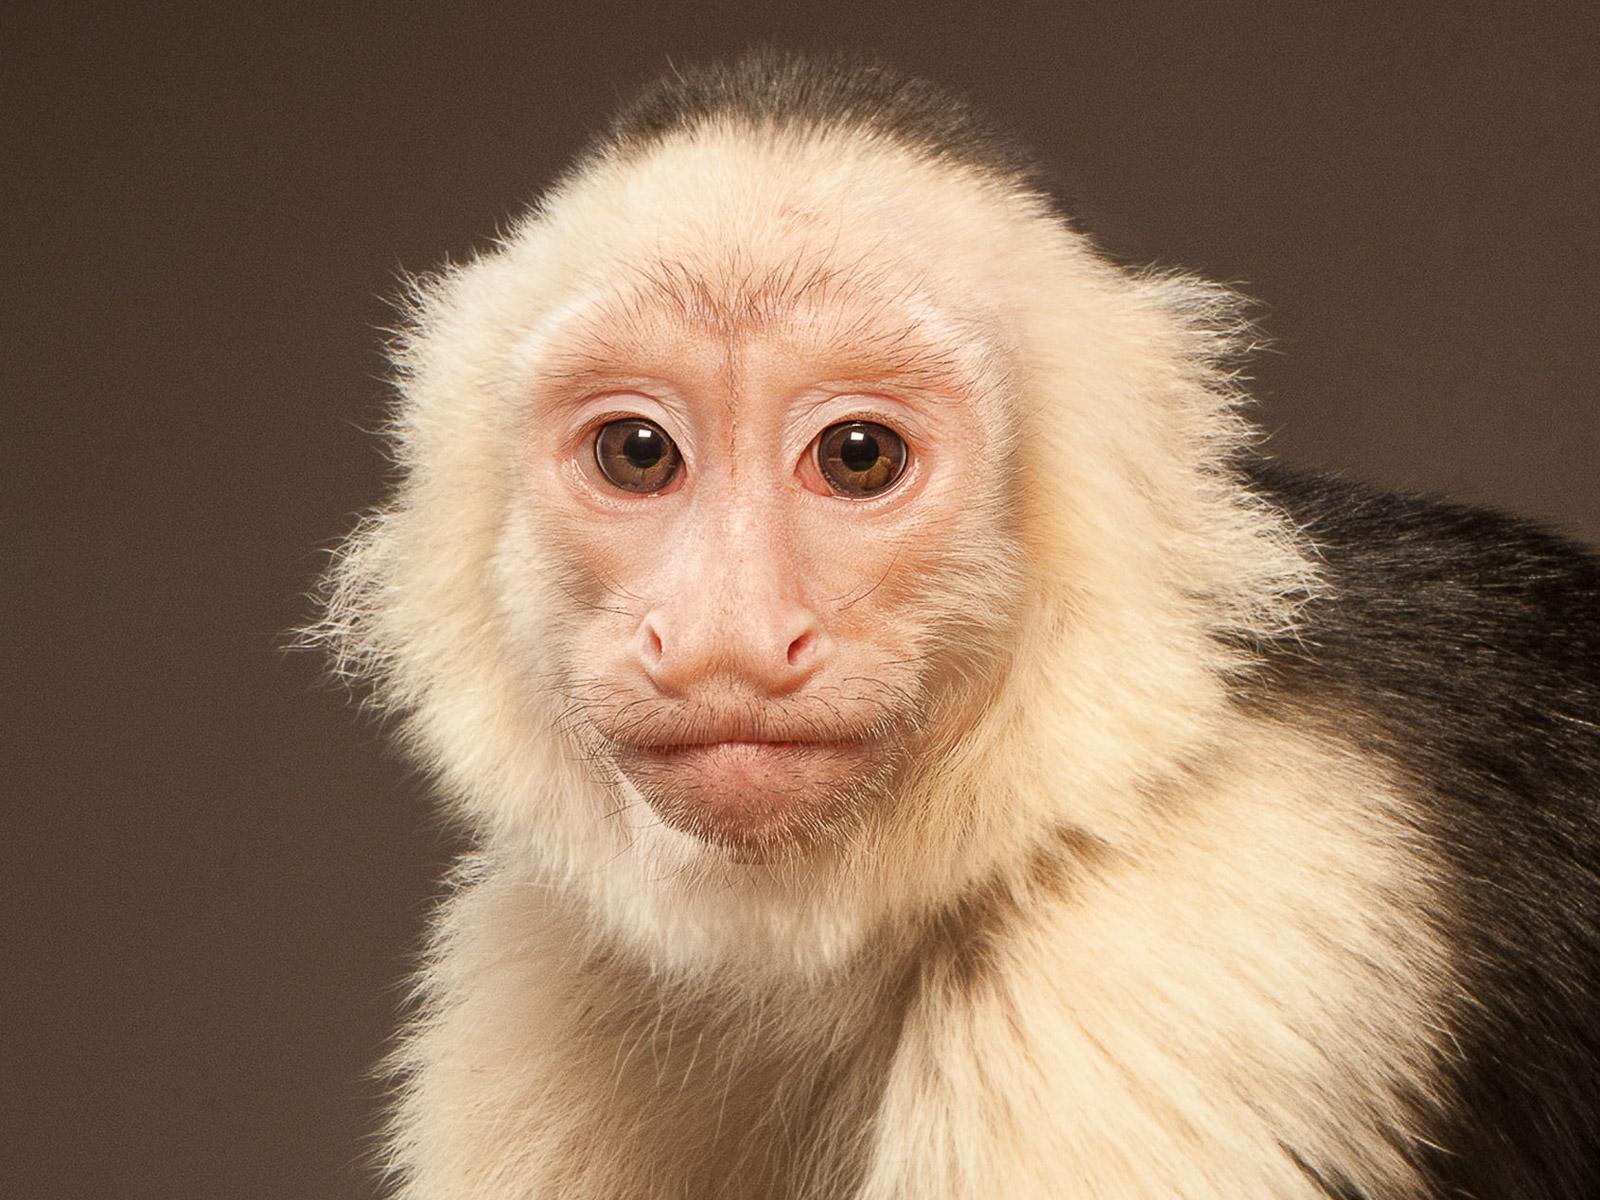 Signed limited edition animal fine art print, brown white monkey - Capuchin 1 - Photograph by Tim Platt